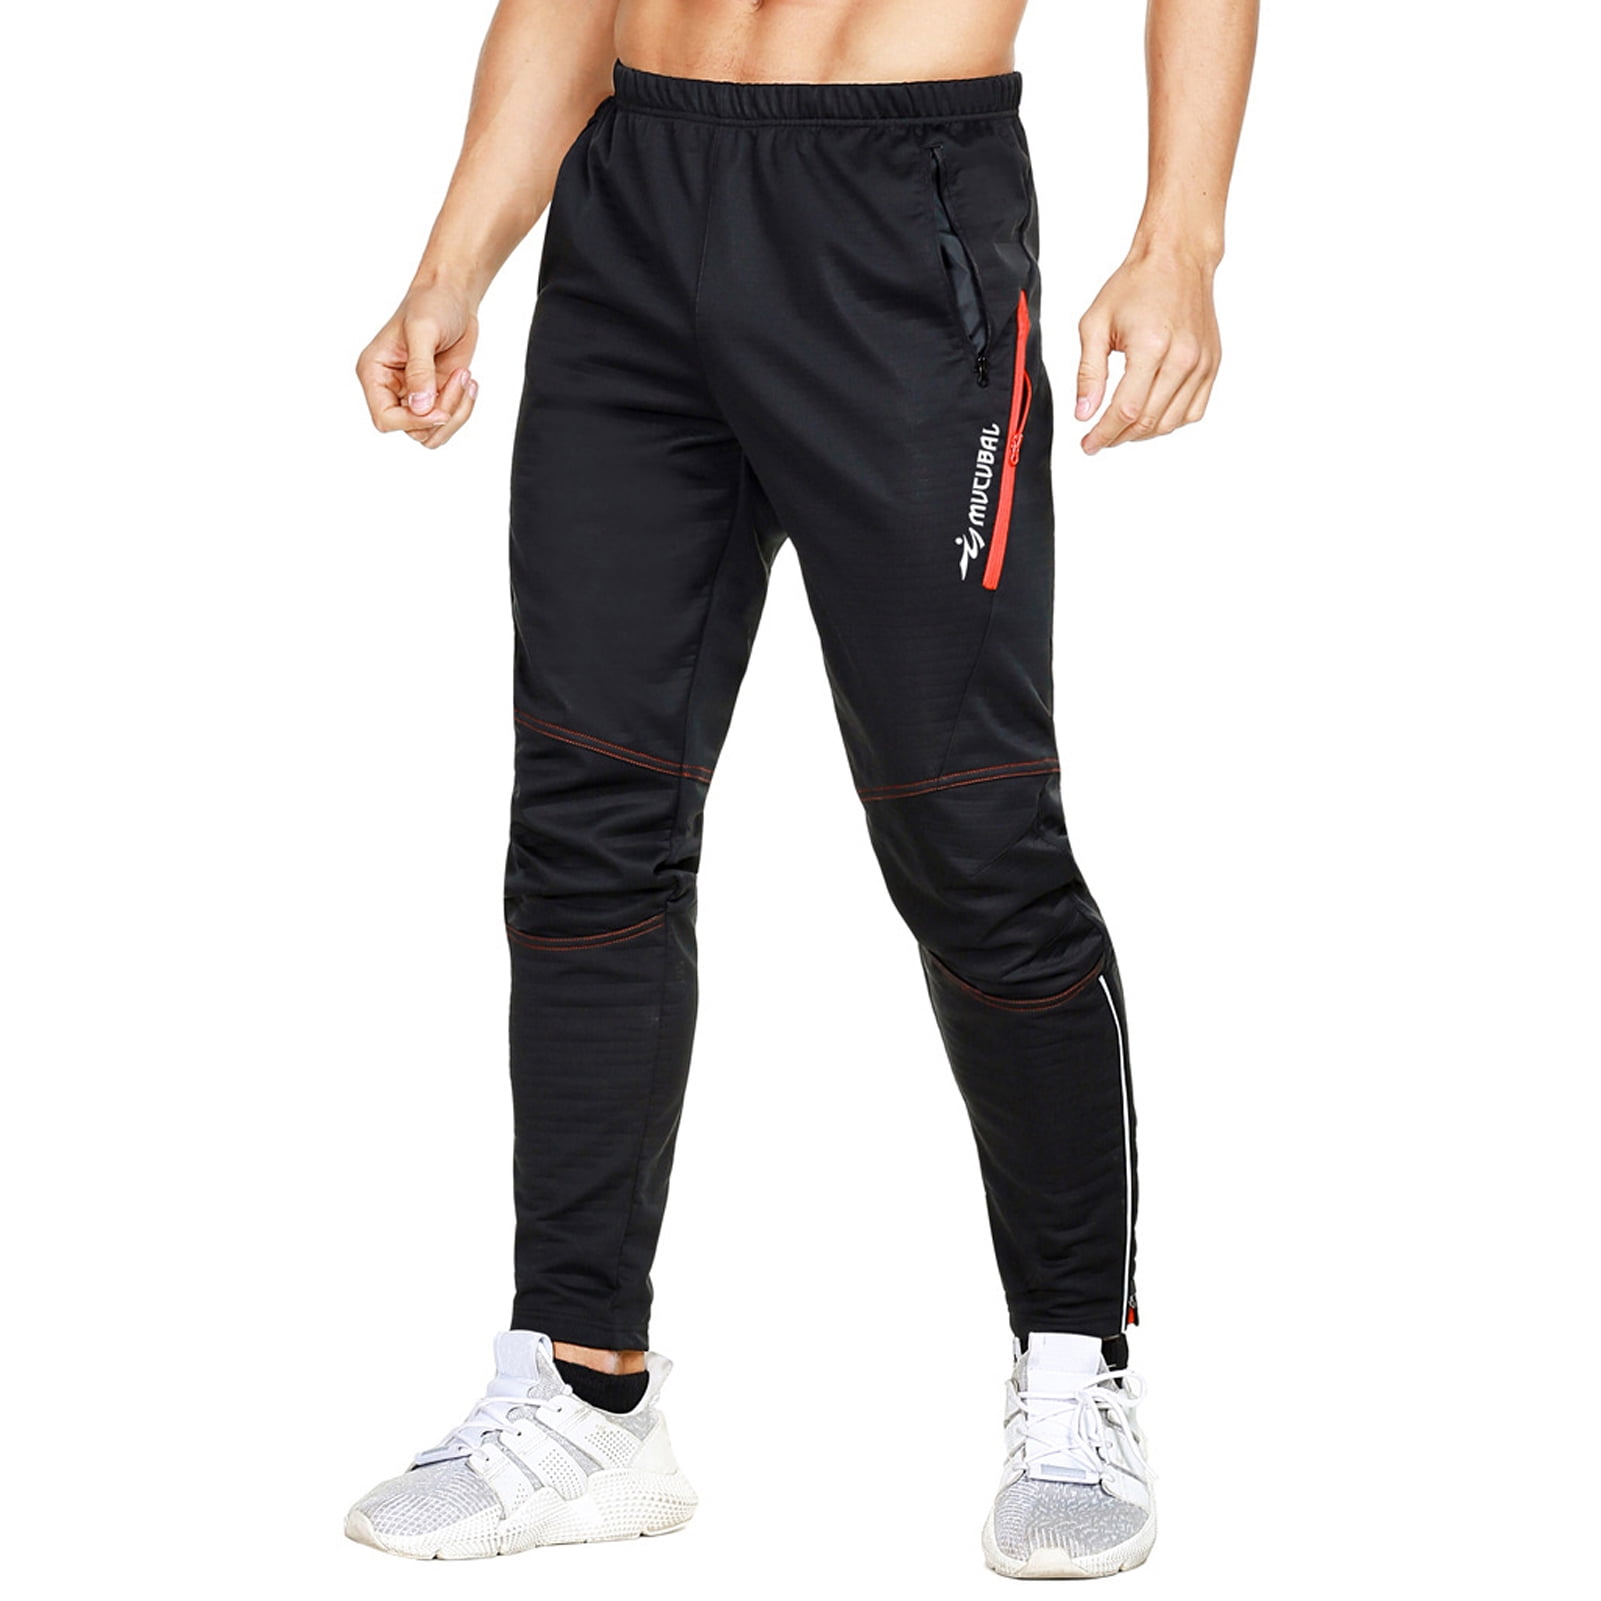 Letook Men’s Cycling Trousers Thermal Bike Pants Fleece Bike Trousers Windproof Warm Sports Pants 